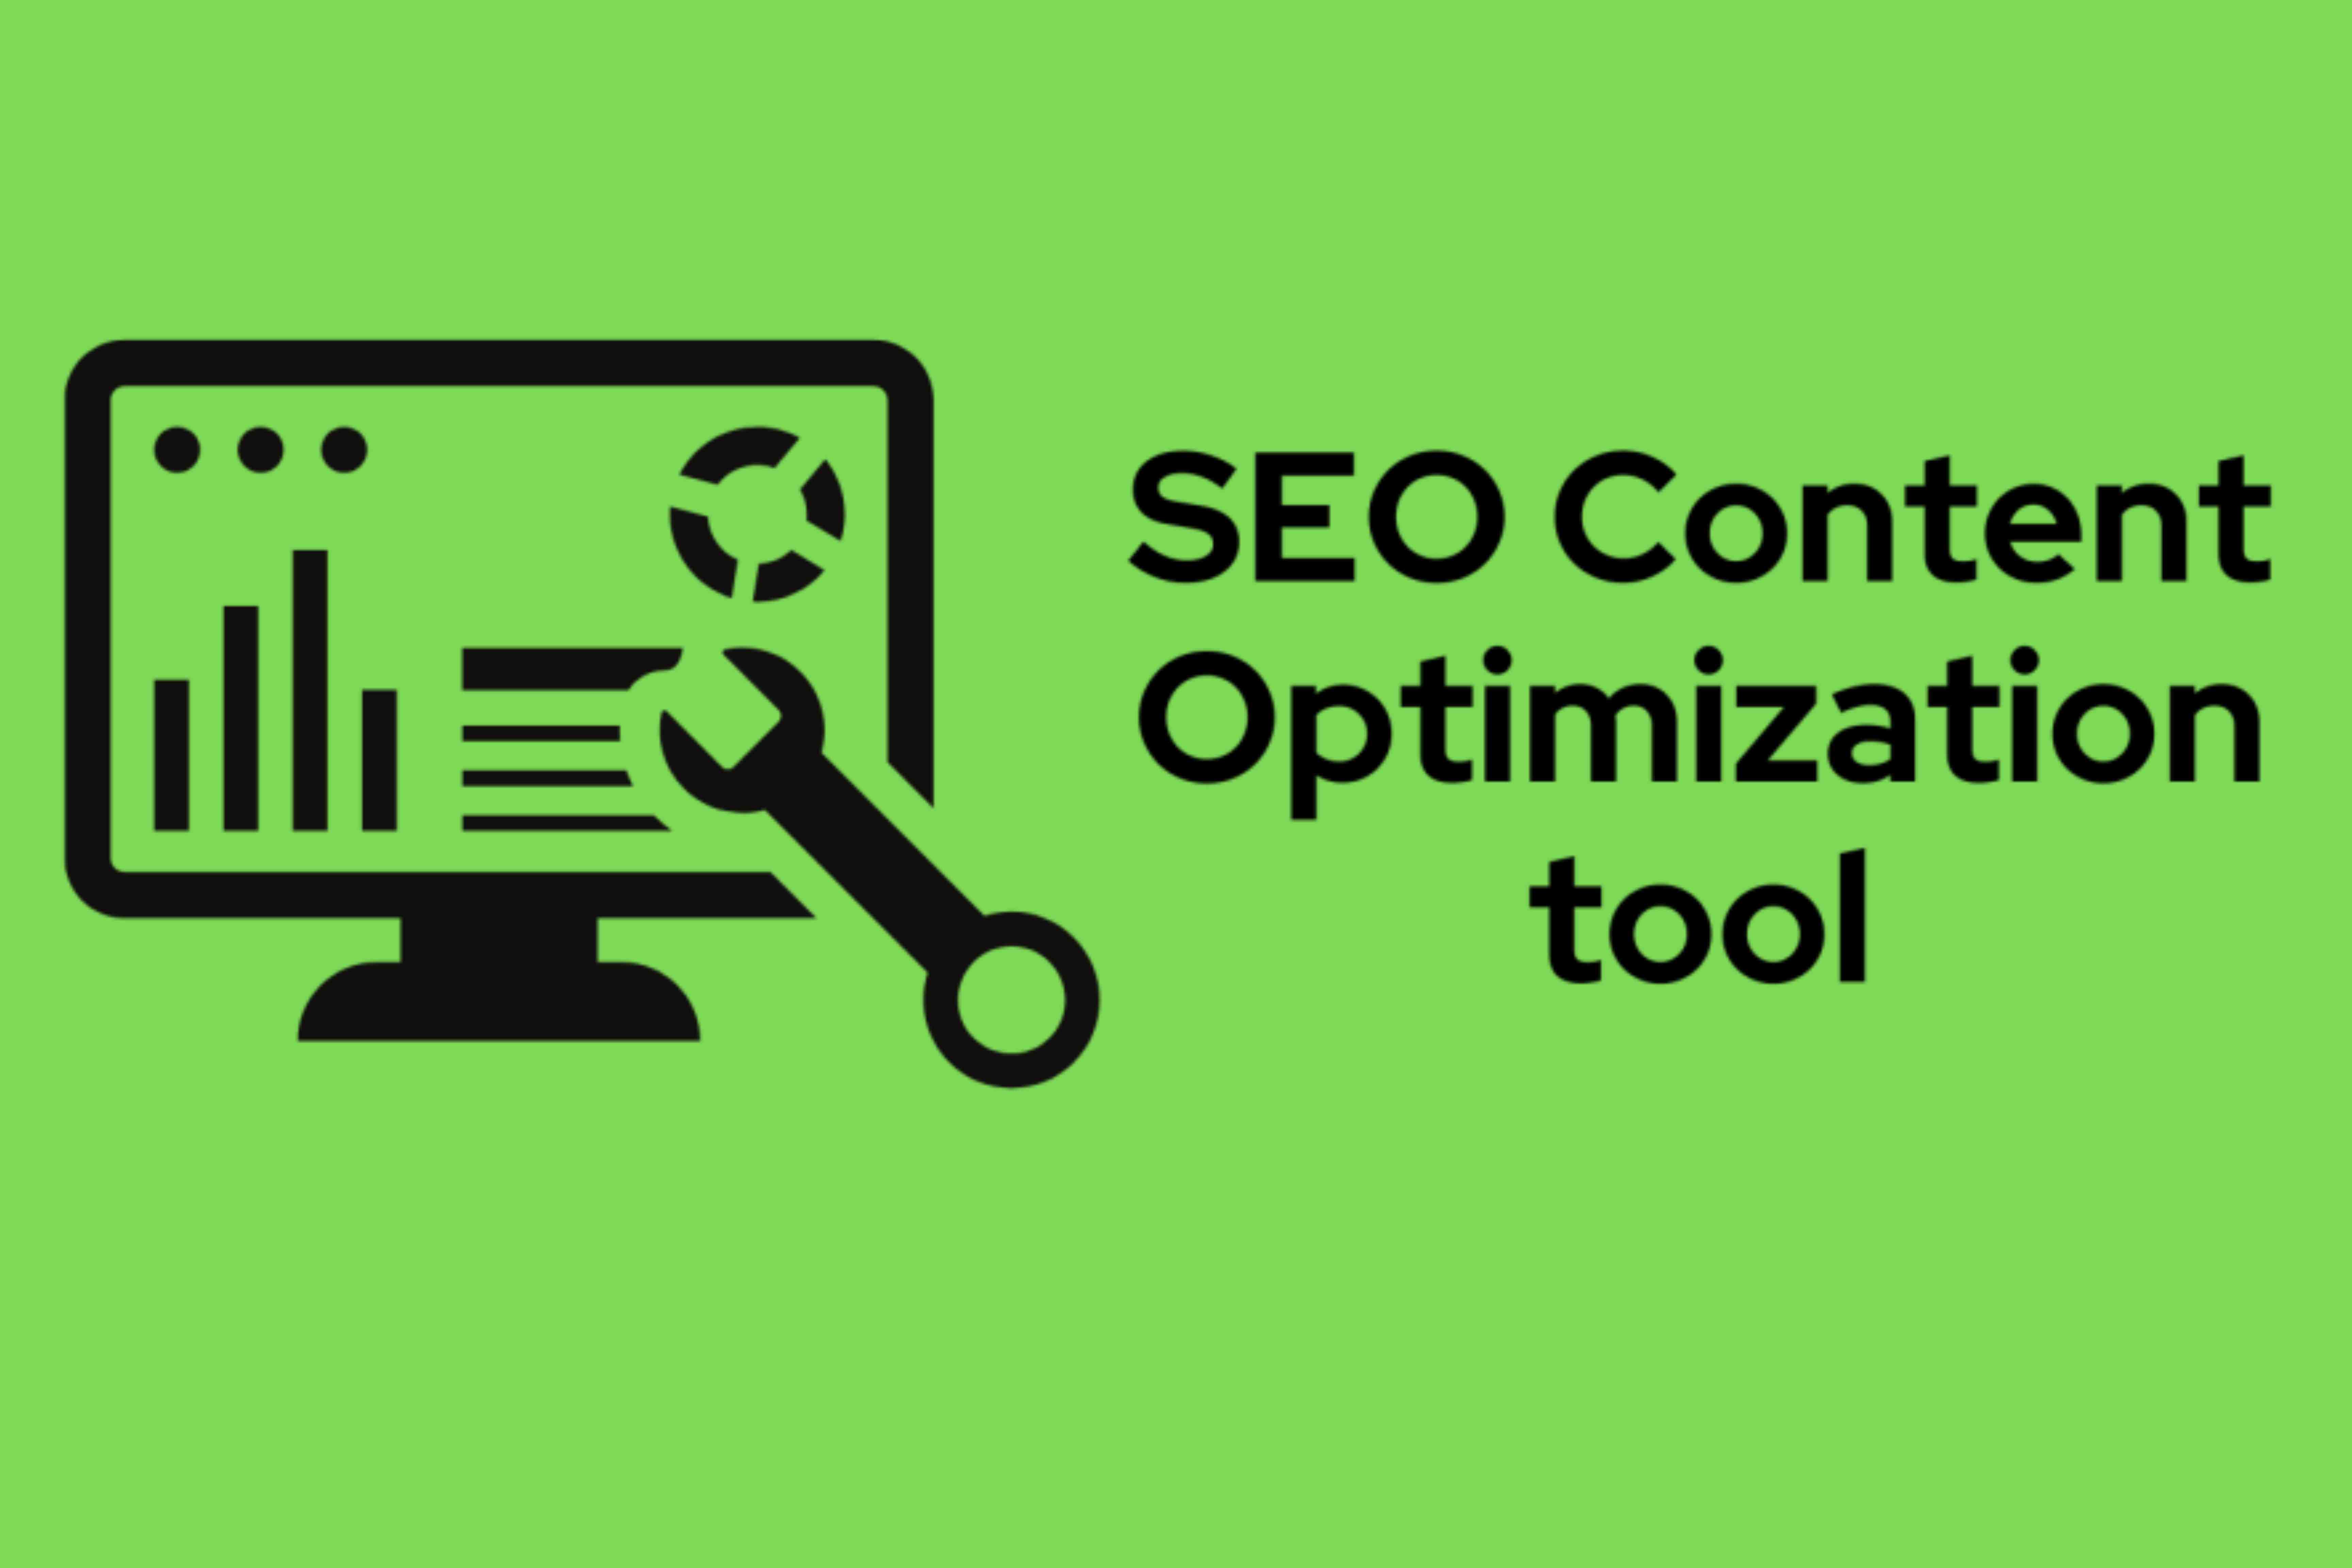 Content Optimization Tools: Creating SEO-Friendly Content